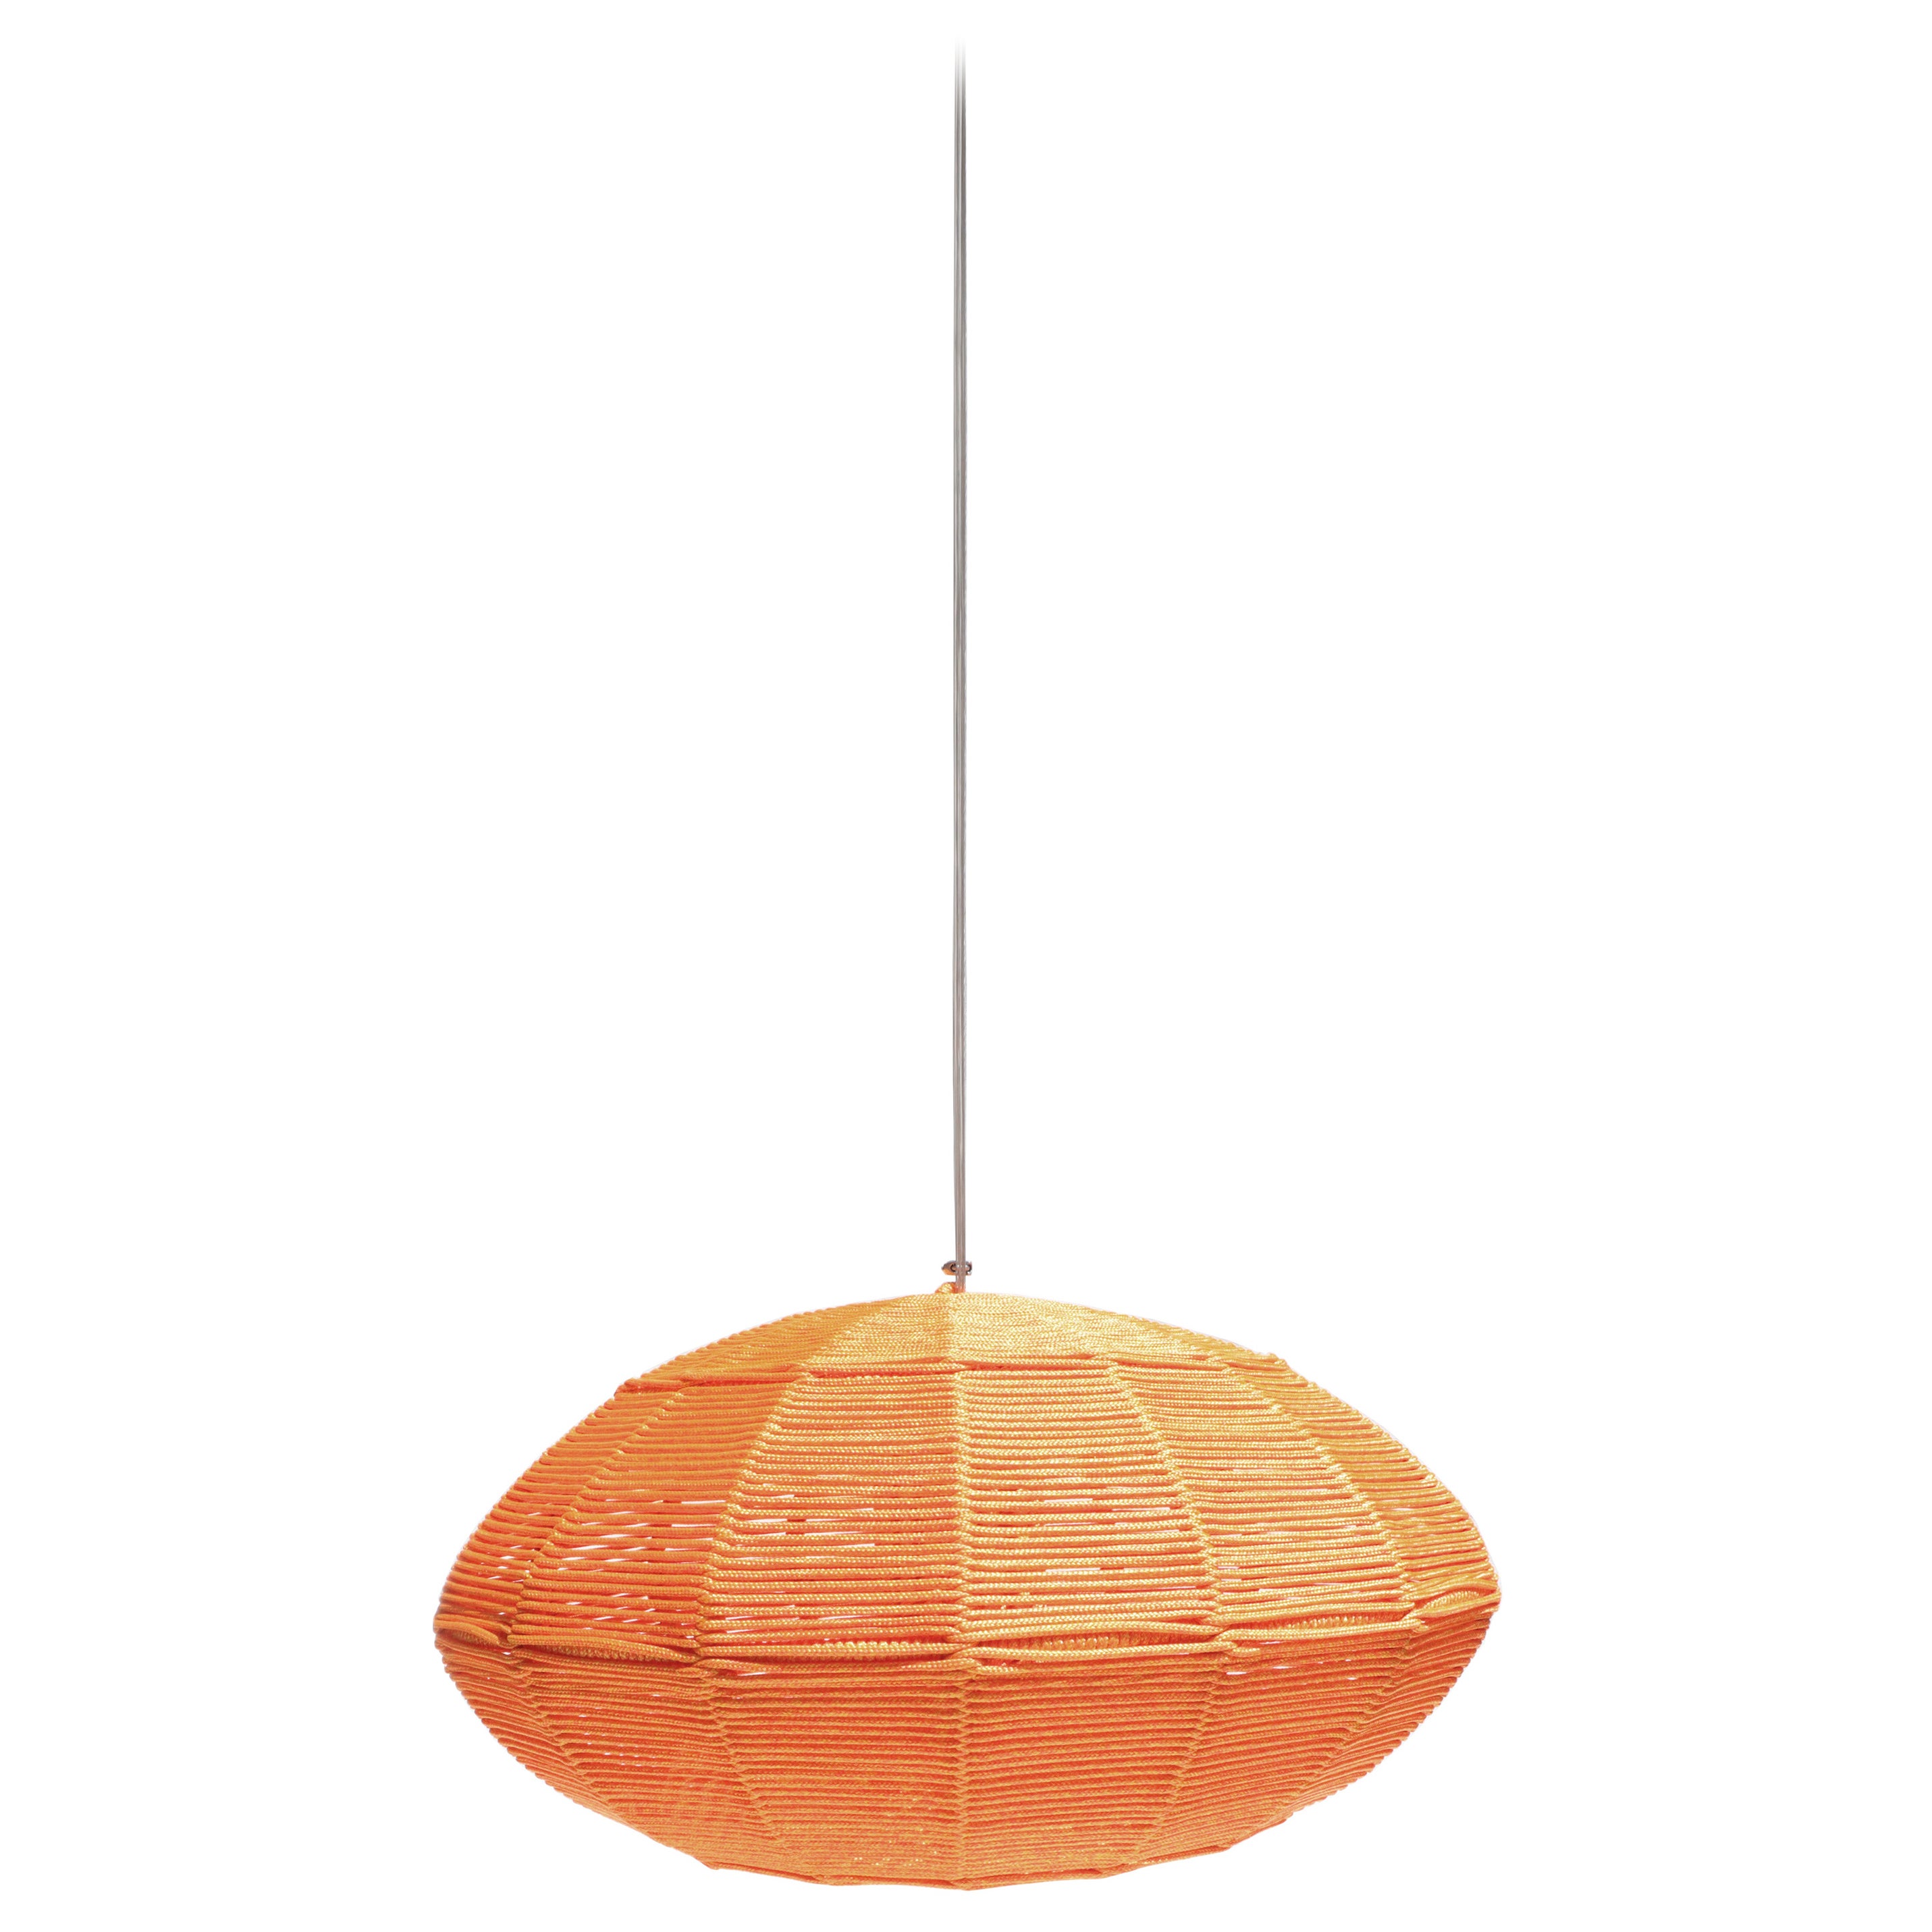 Catolé lamp (60 cm Ø) - In Orange